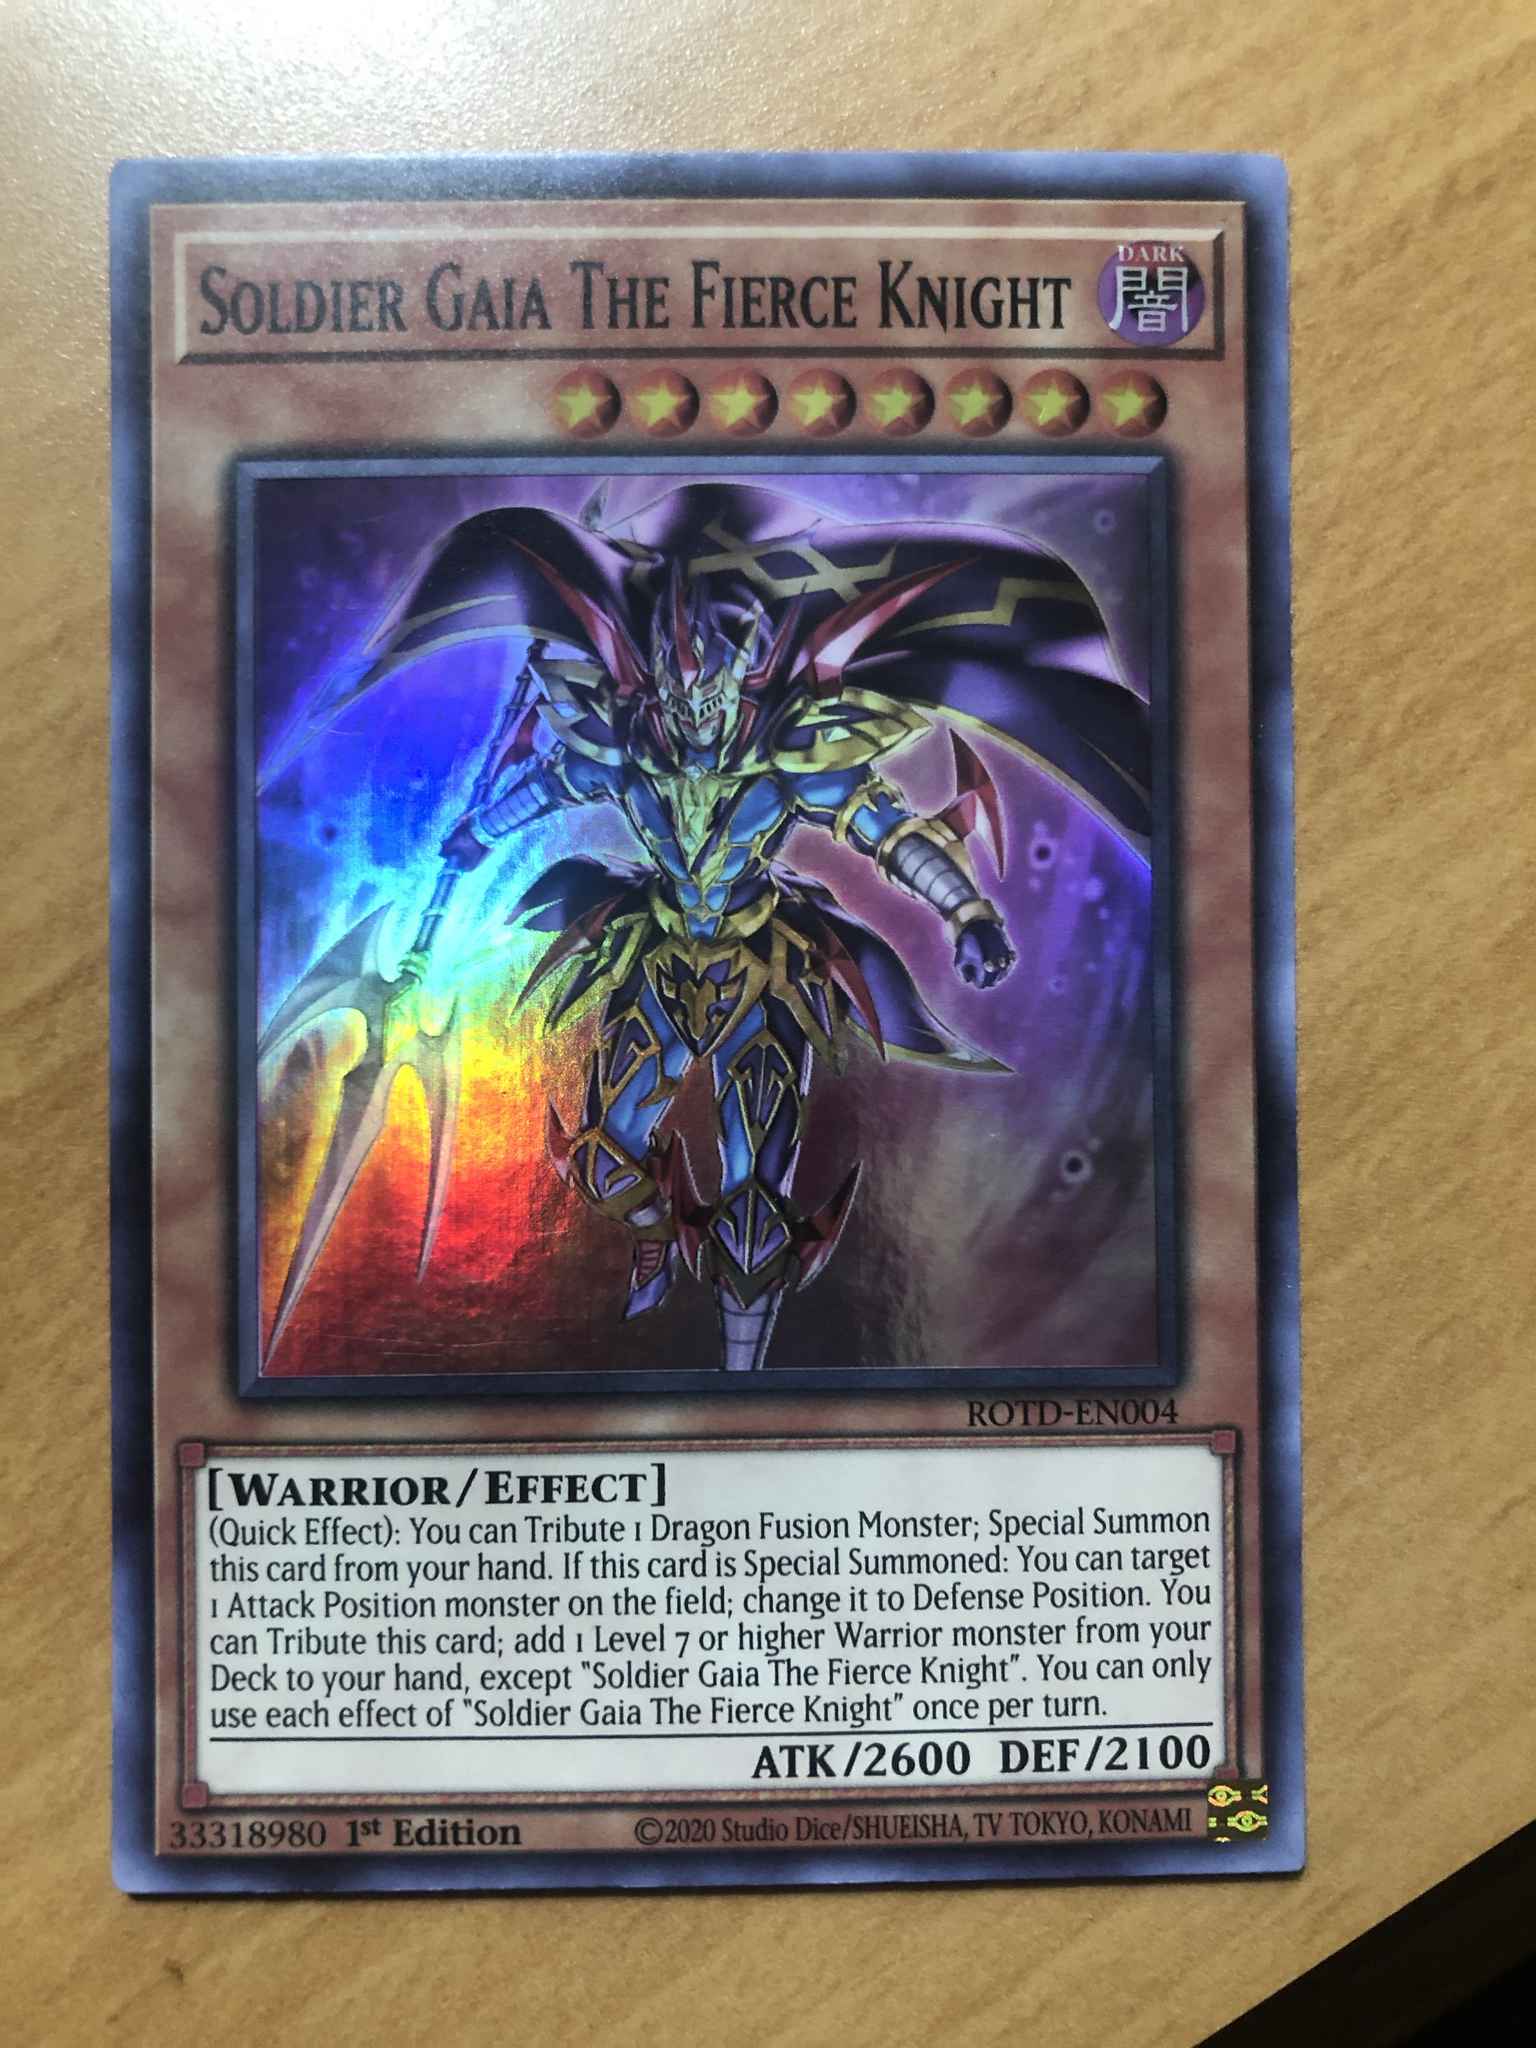 Soldier Gaia The Fierce Knight ROTD-EN004 Super Rare Yu-Gi-Oh Card 1st Edition